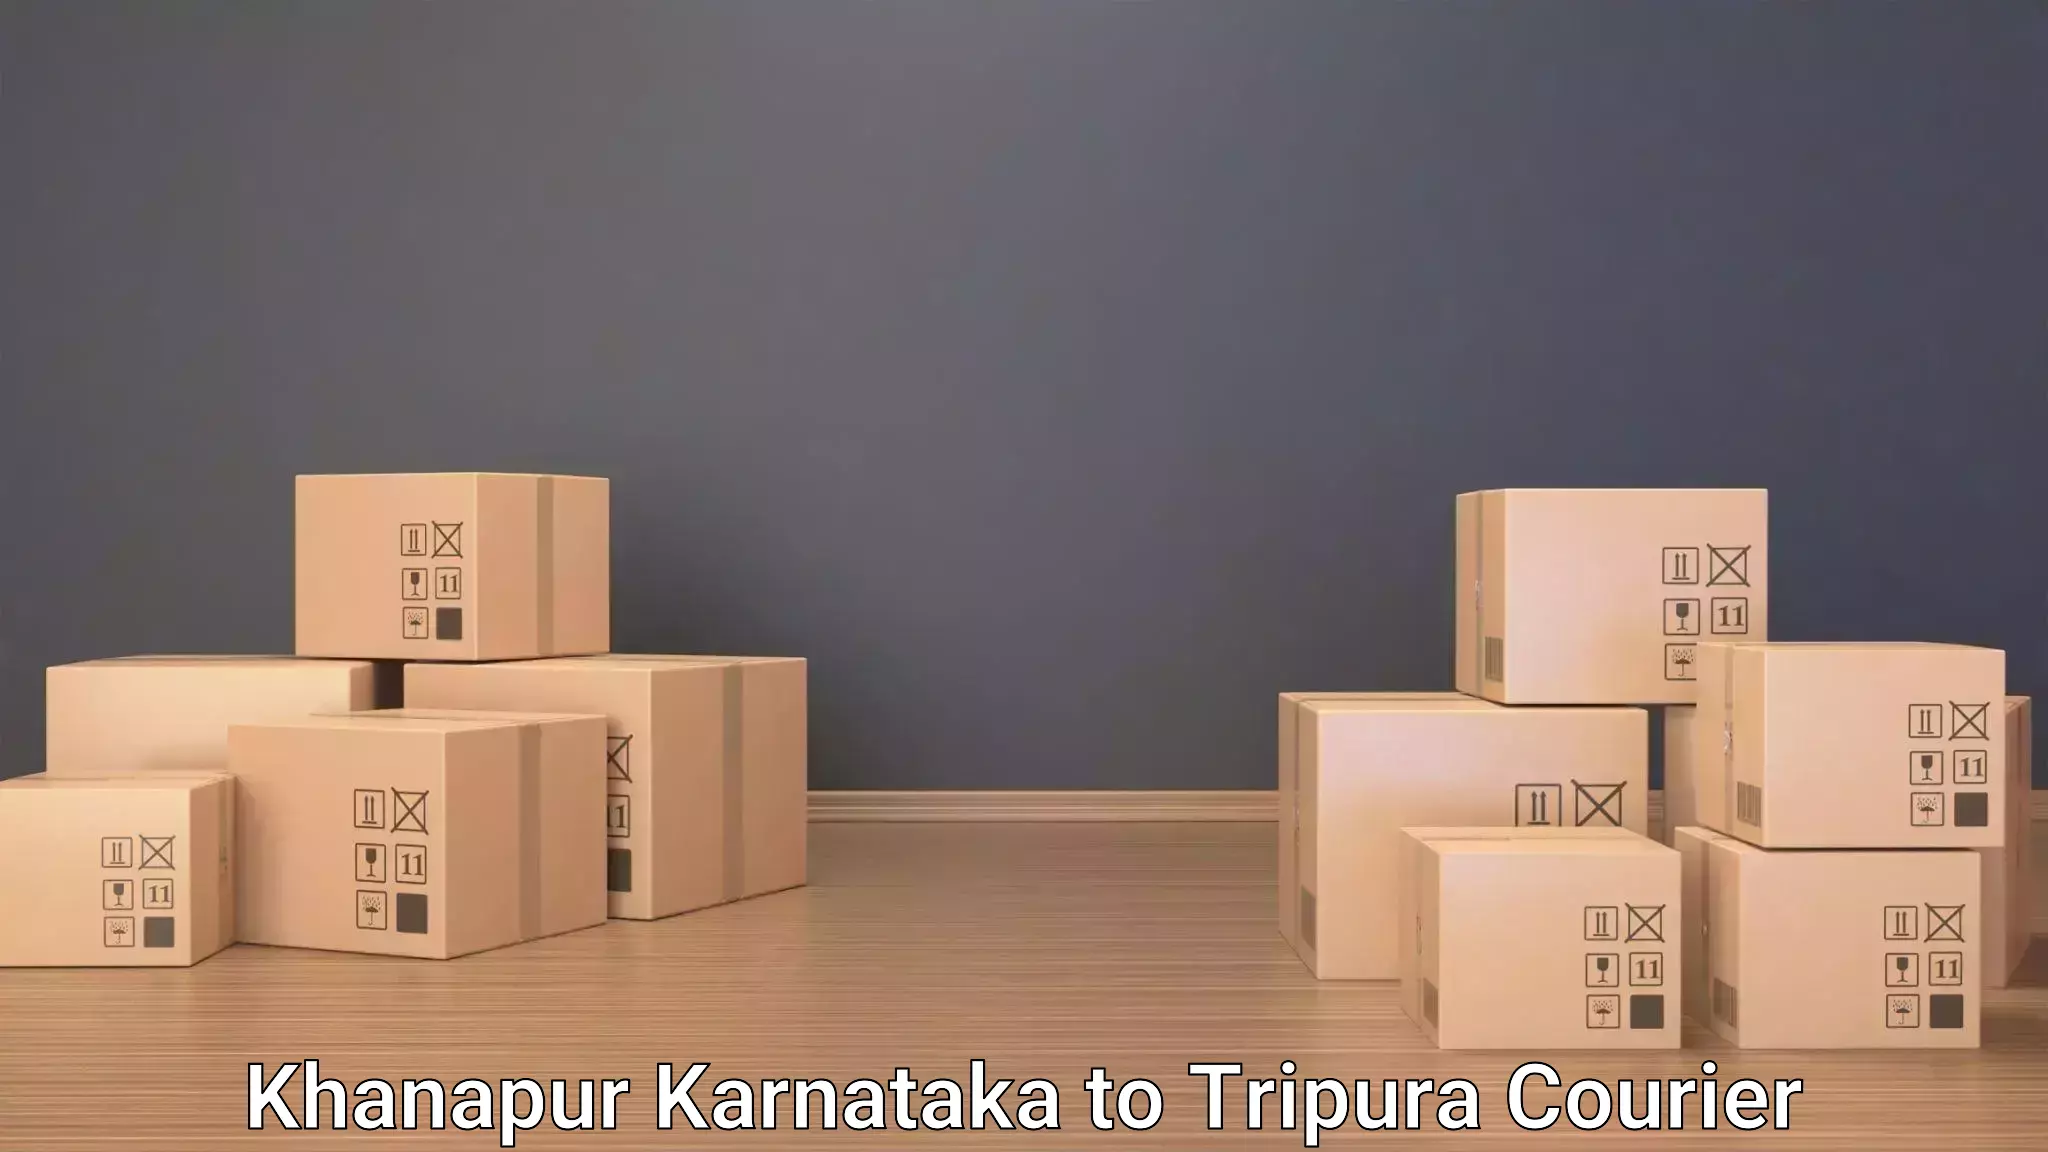 Baggage transport innovation Khanapur Karnataka to South Tripura